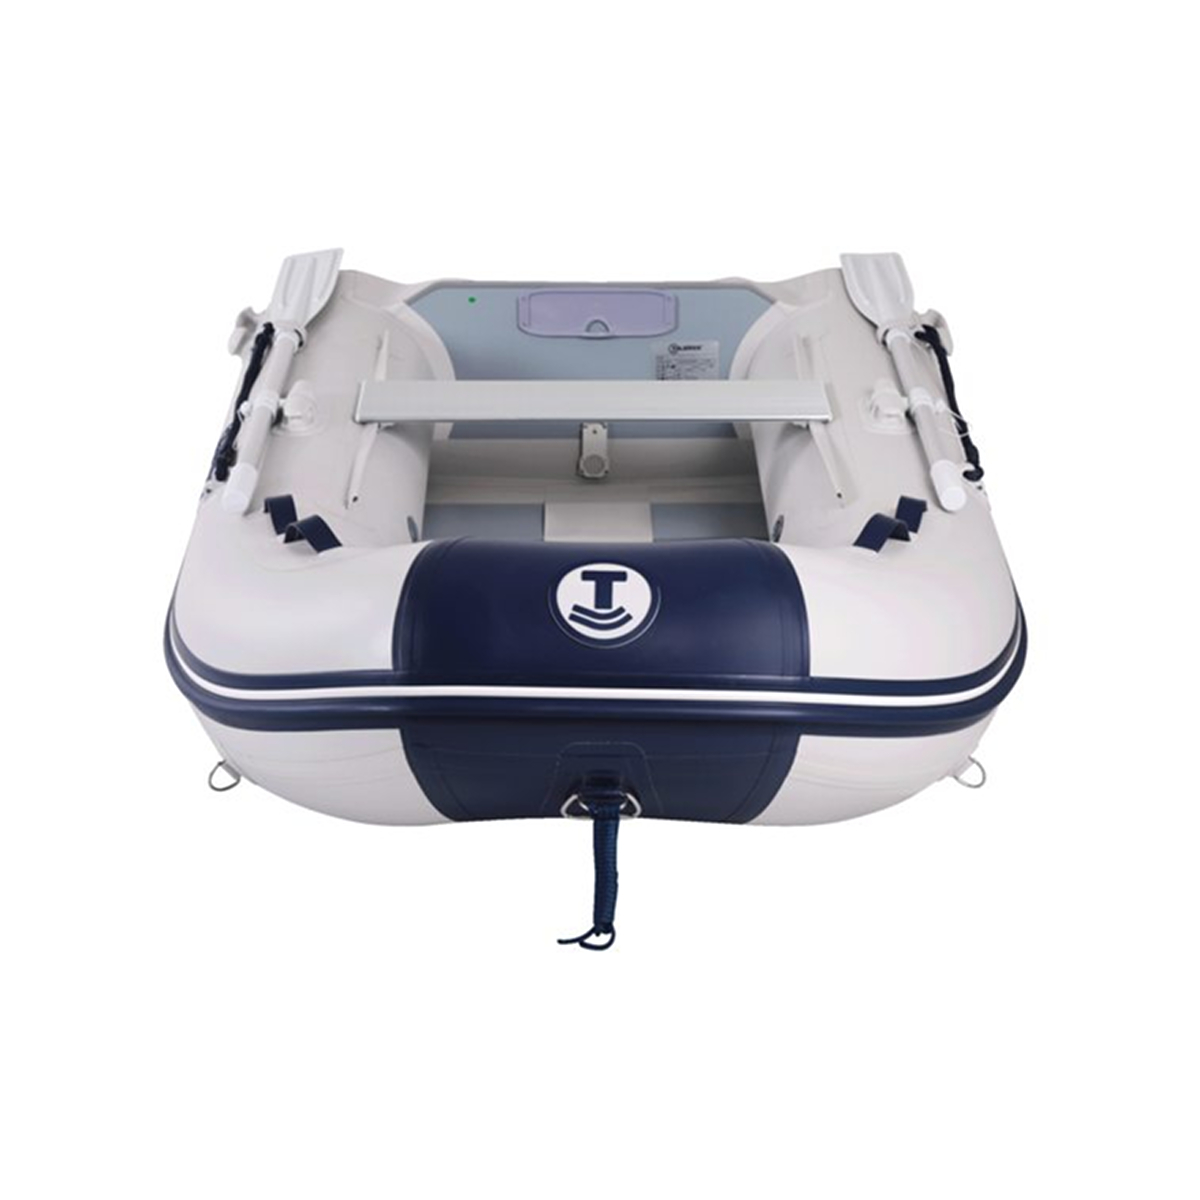 Talamex Comfortline TLS230 opblaasbare rubberboot met lattenbodem, lengte 2,30m, grijs